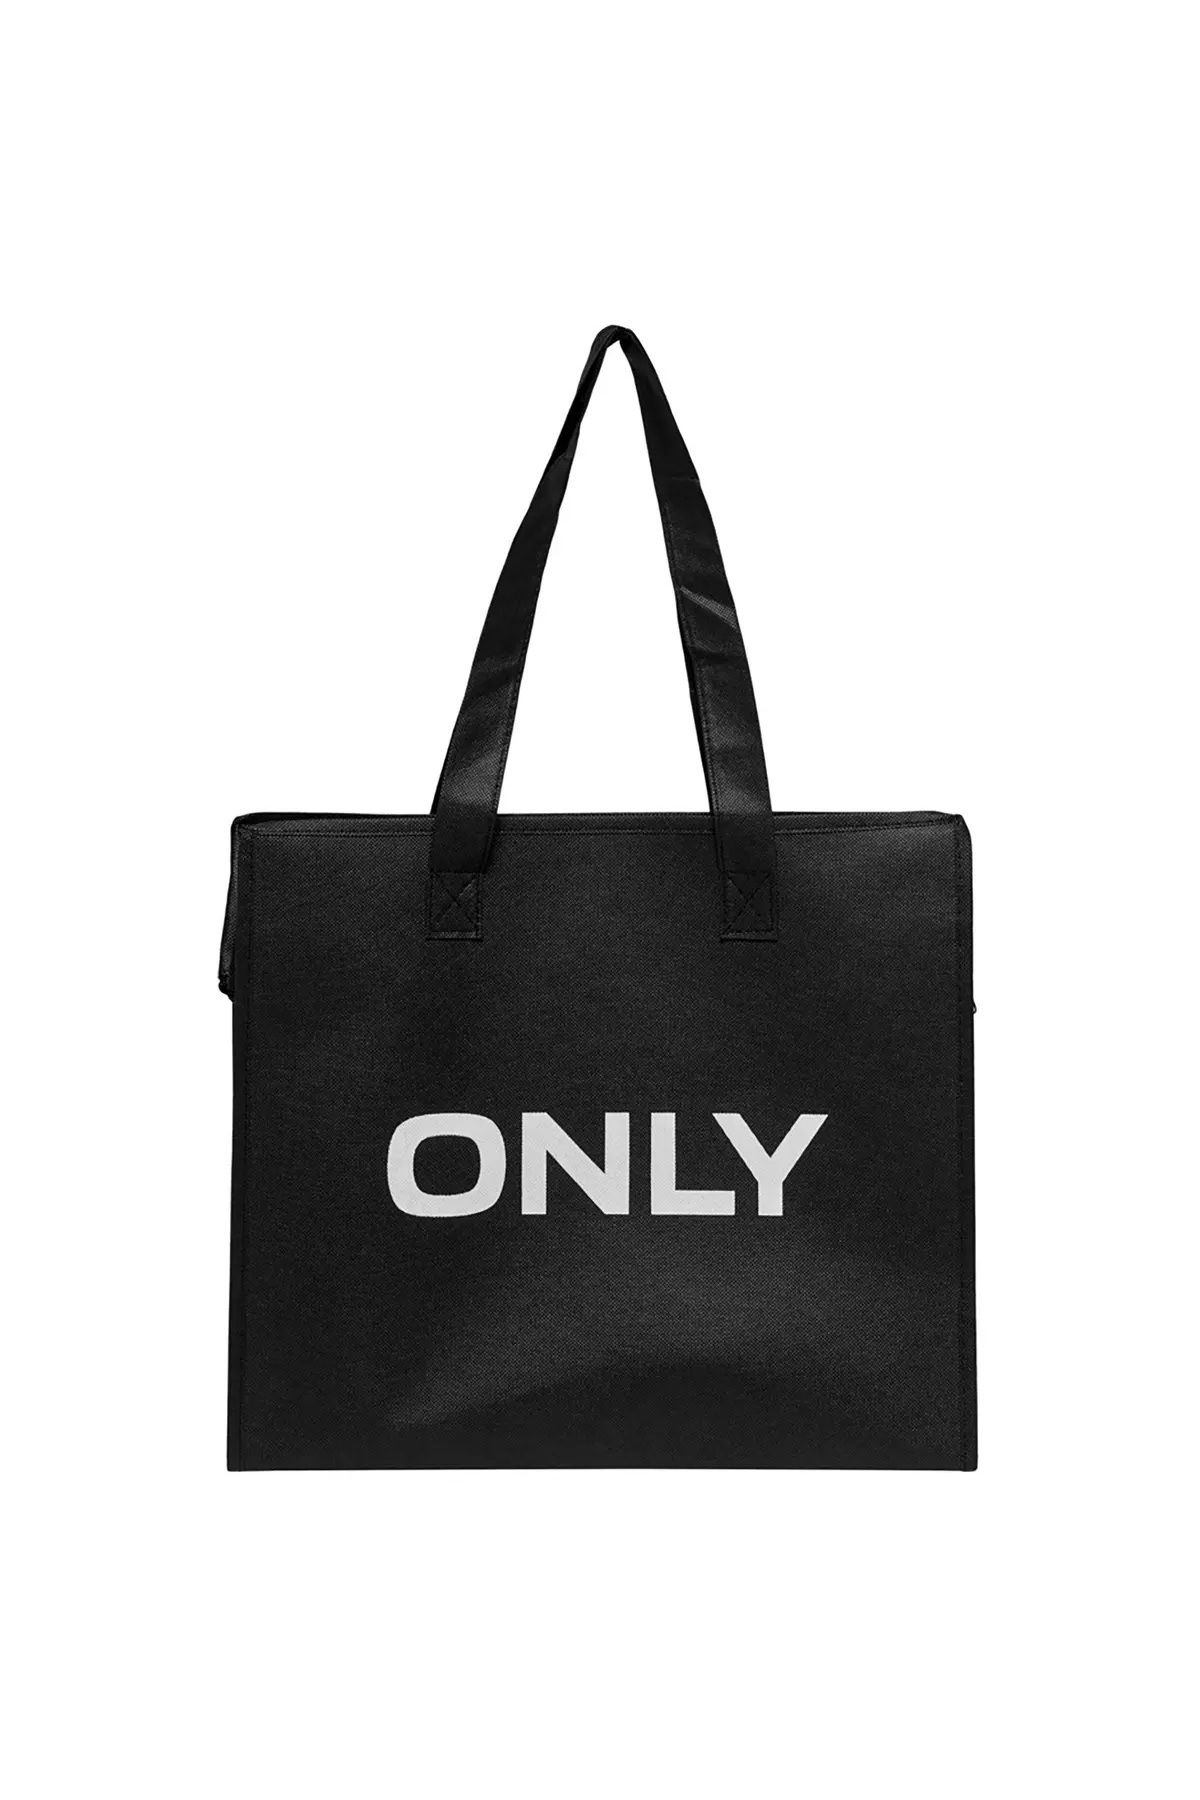 Only Shopping GALİP BABA Bag Black Solid Kadın Siyah Çanta